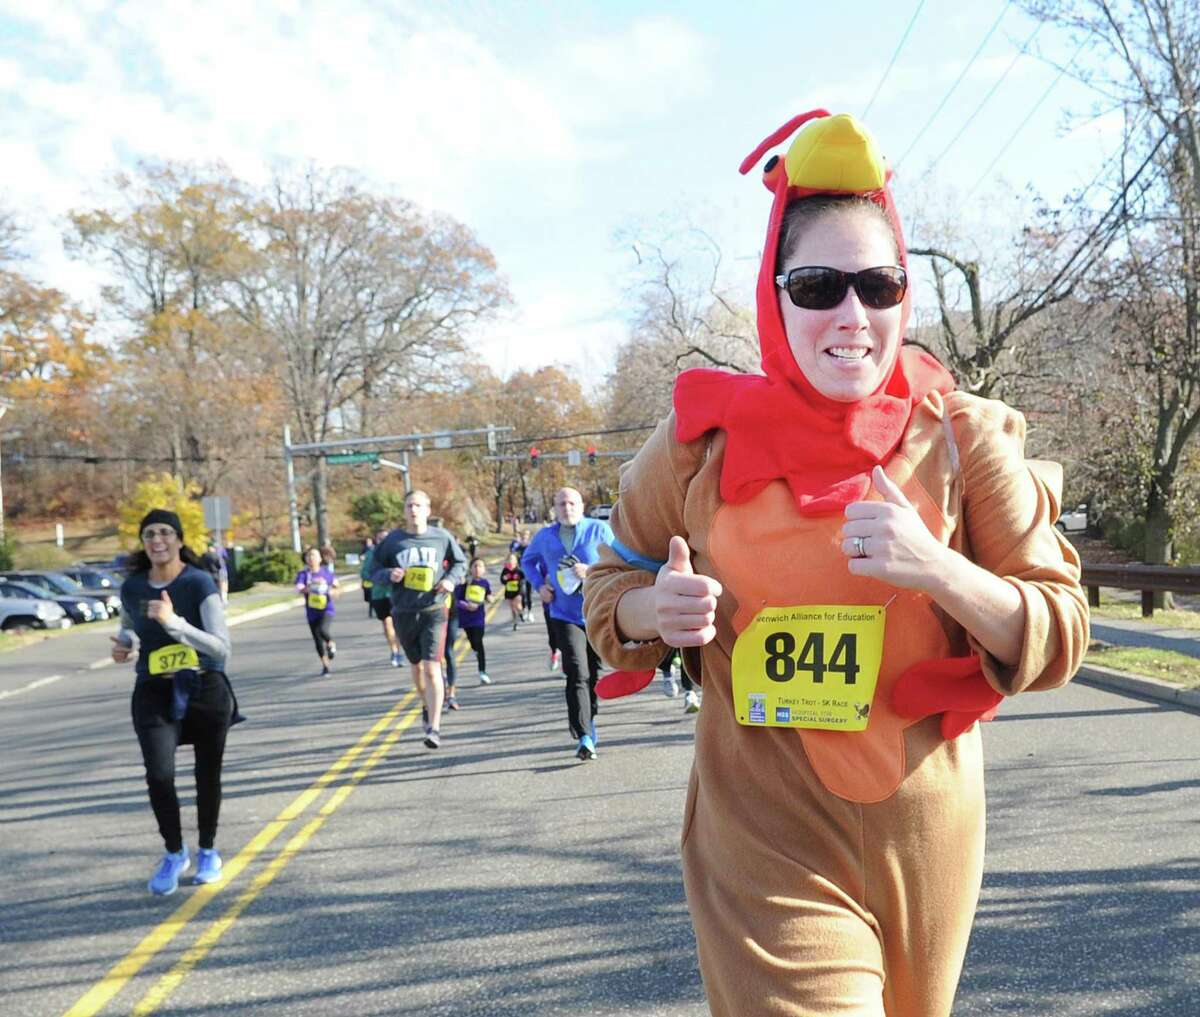 Jess Reid of Greenwich wore a turkey costume as she ran in the Greenwich Alliance for Education Turkey Trot 5K & 1 Mile Walk/Run at Roger Sherman Baldwin Park in Greenwich, Conn., Saturday morning, Nov. 25, 2017.